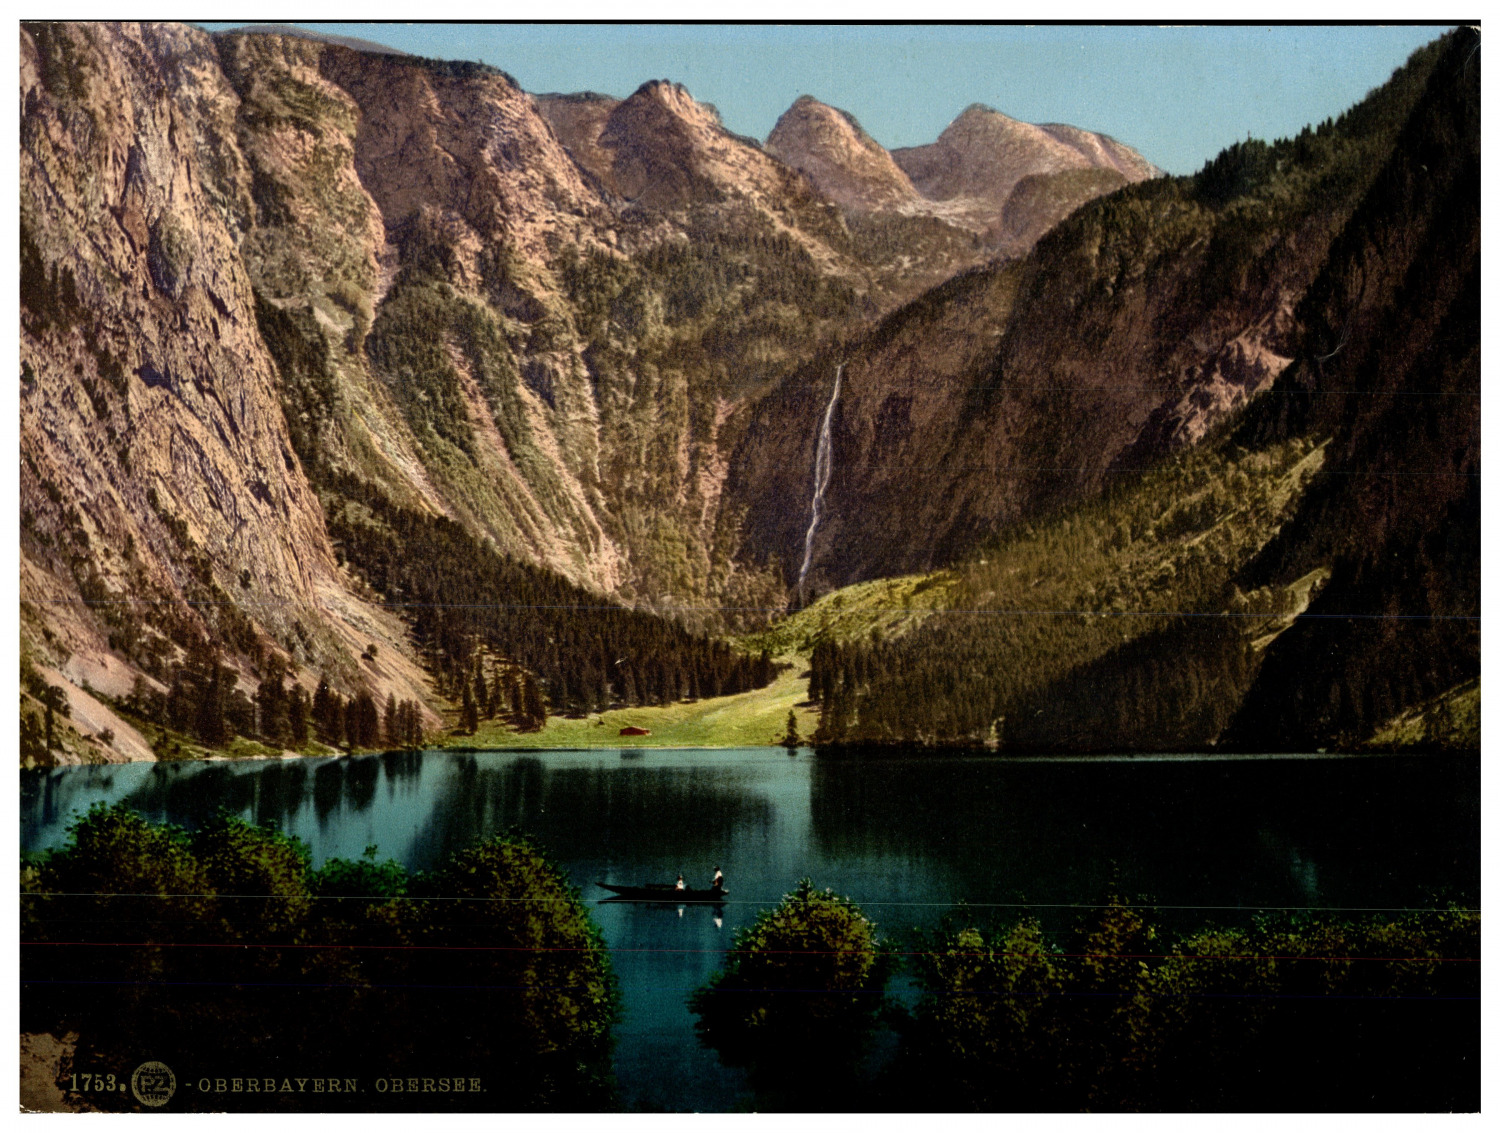 Germany, Upper Bavaria, Obersee vintage photochrome, photochromy, vintage p